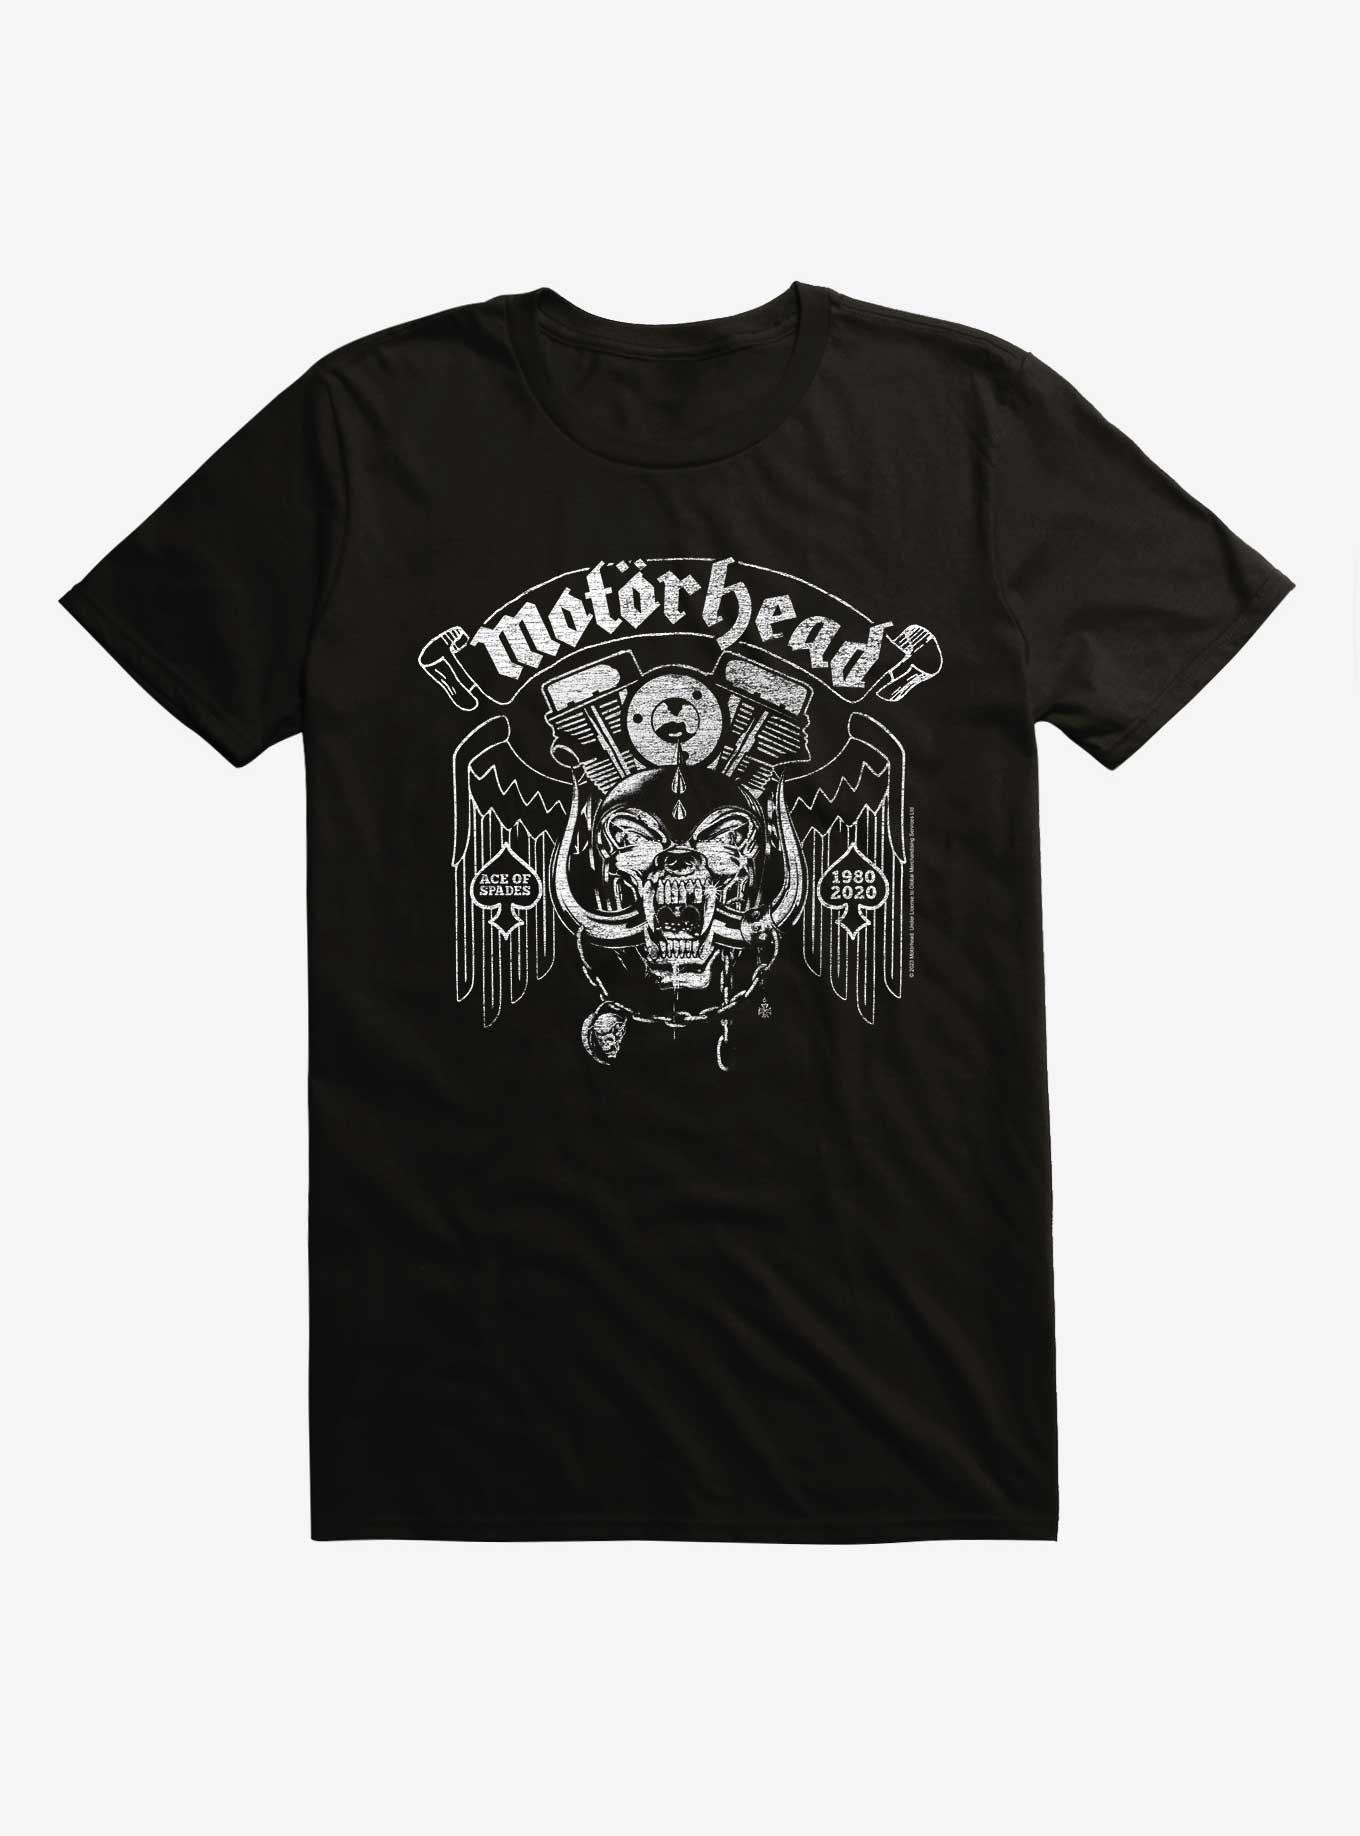 Motorhead Est. 1980-2020 T-Shirt